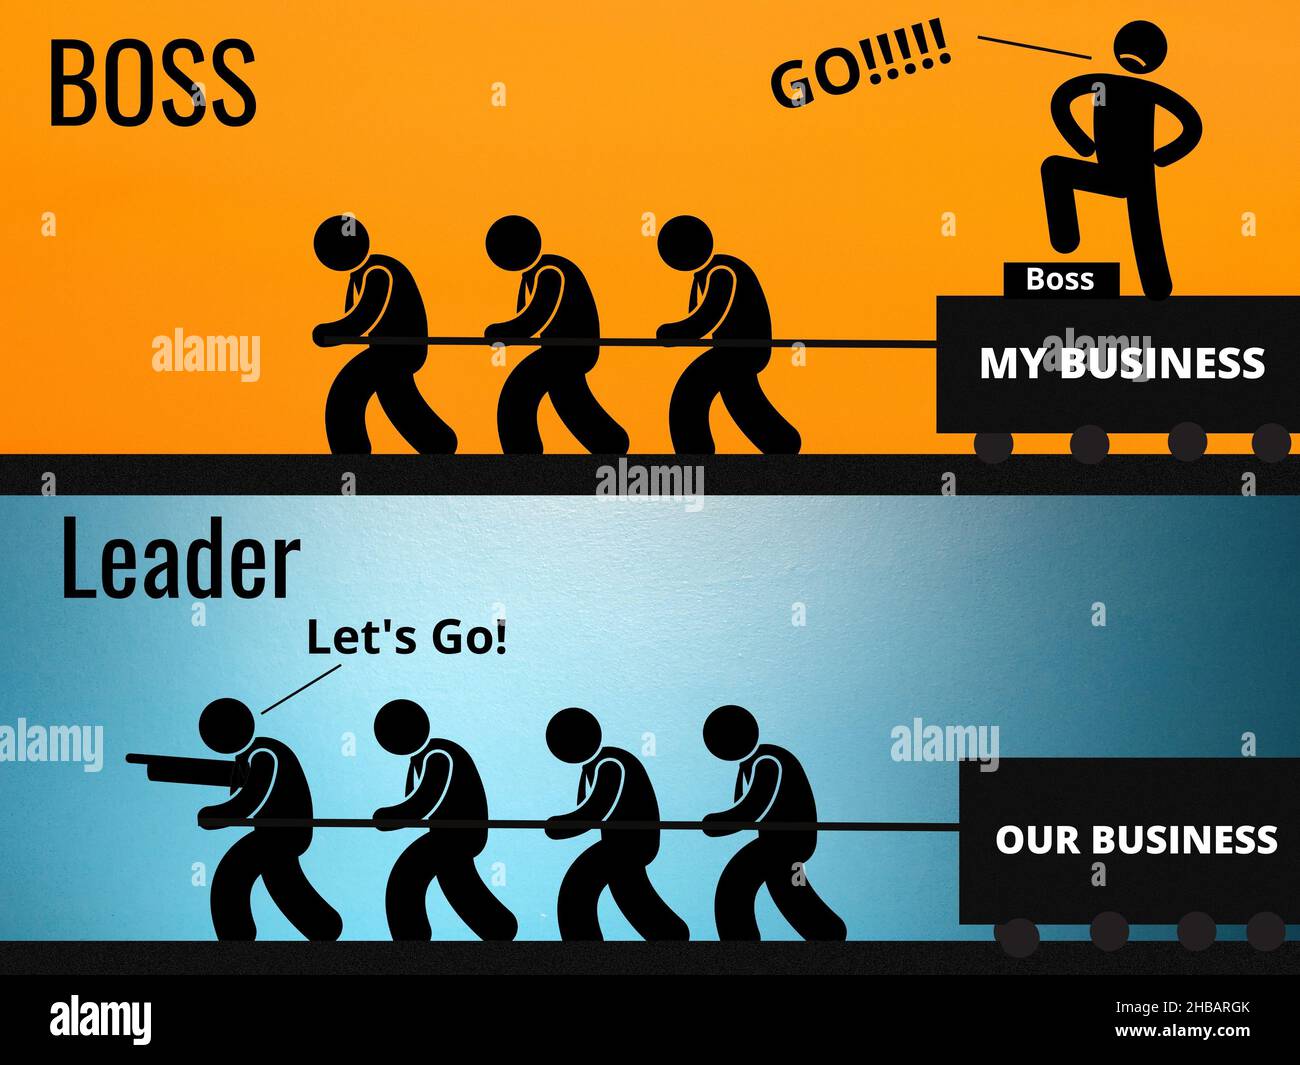 https://c8.alamy.com/comp/2HBARGK/differences-between-a-leader-and-a-boss-leadership-concept-2HBARGK.jpg